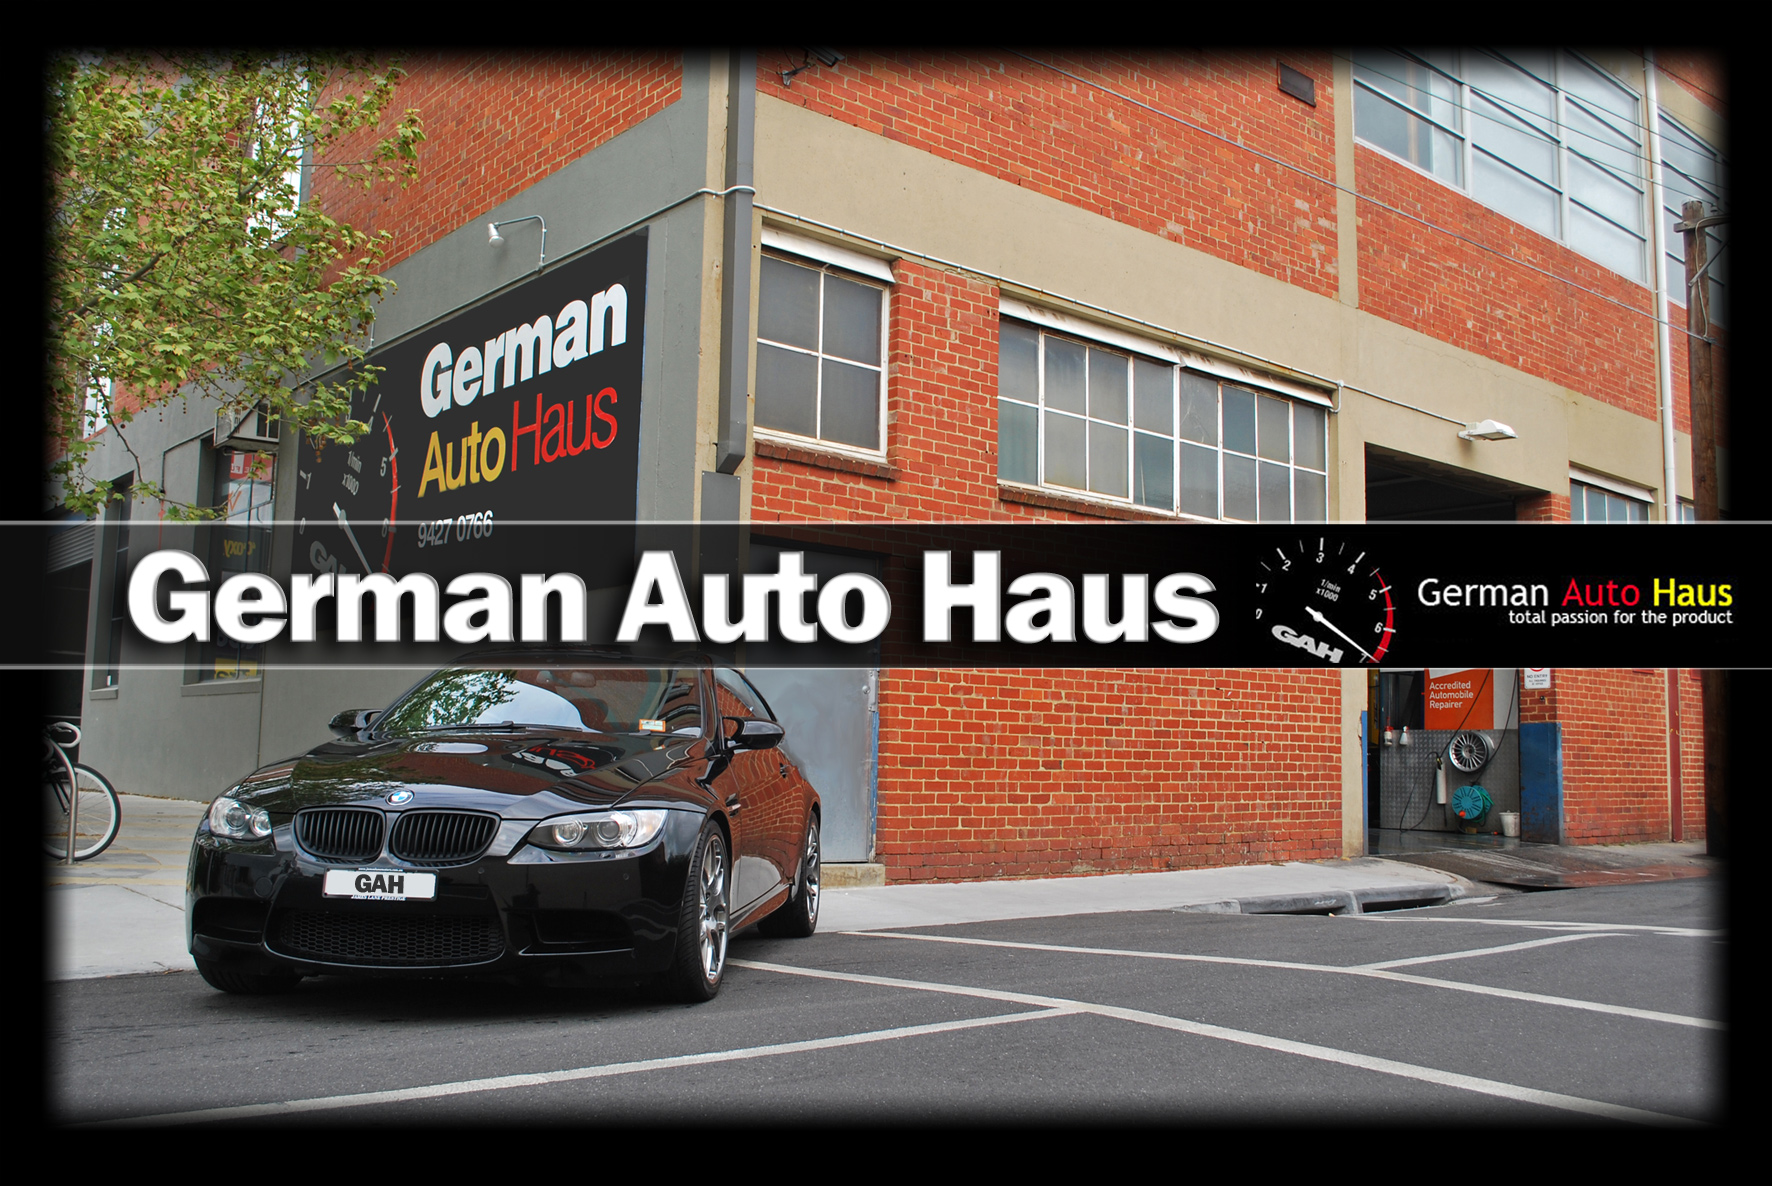 German Auto Haus